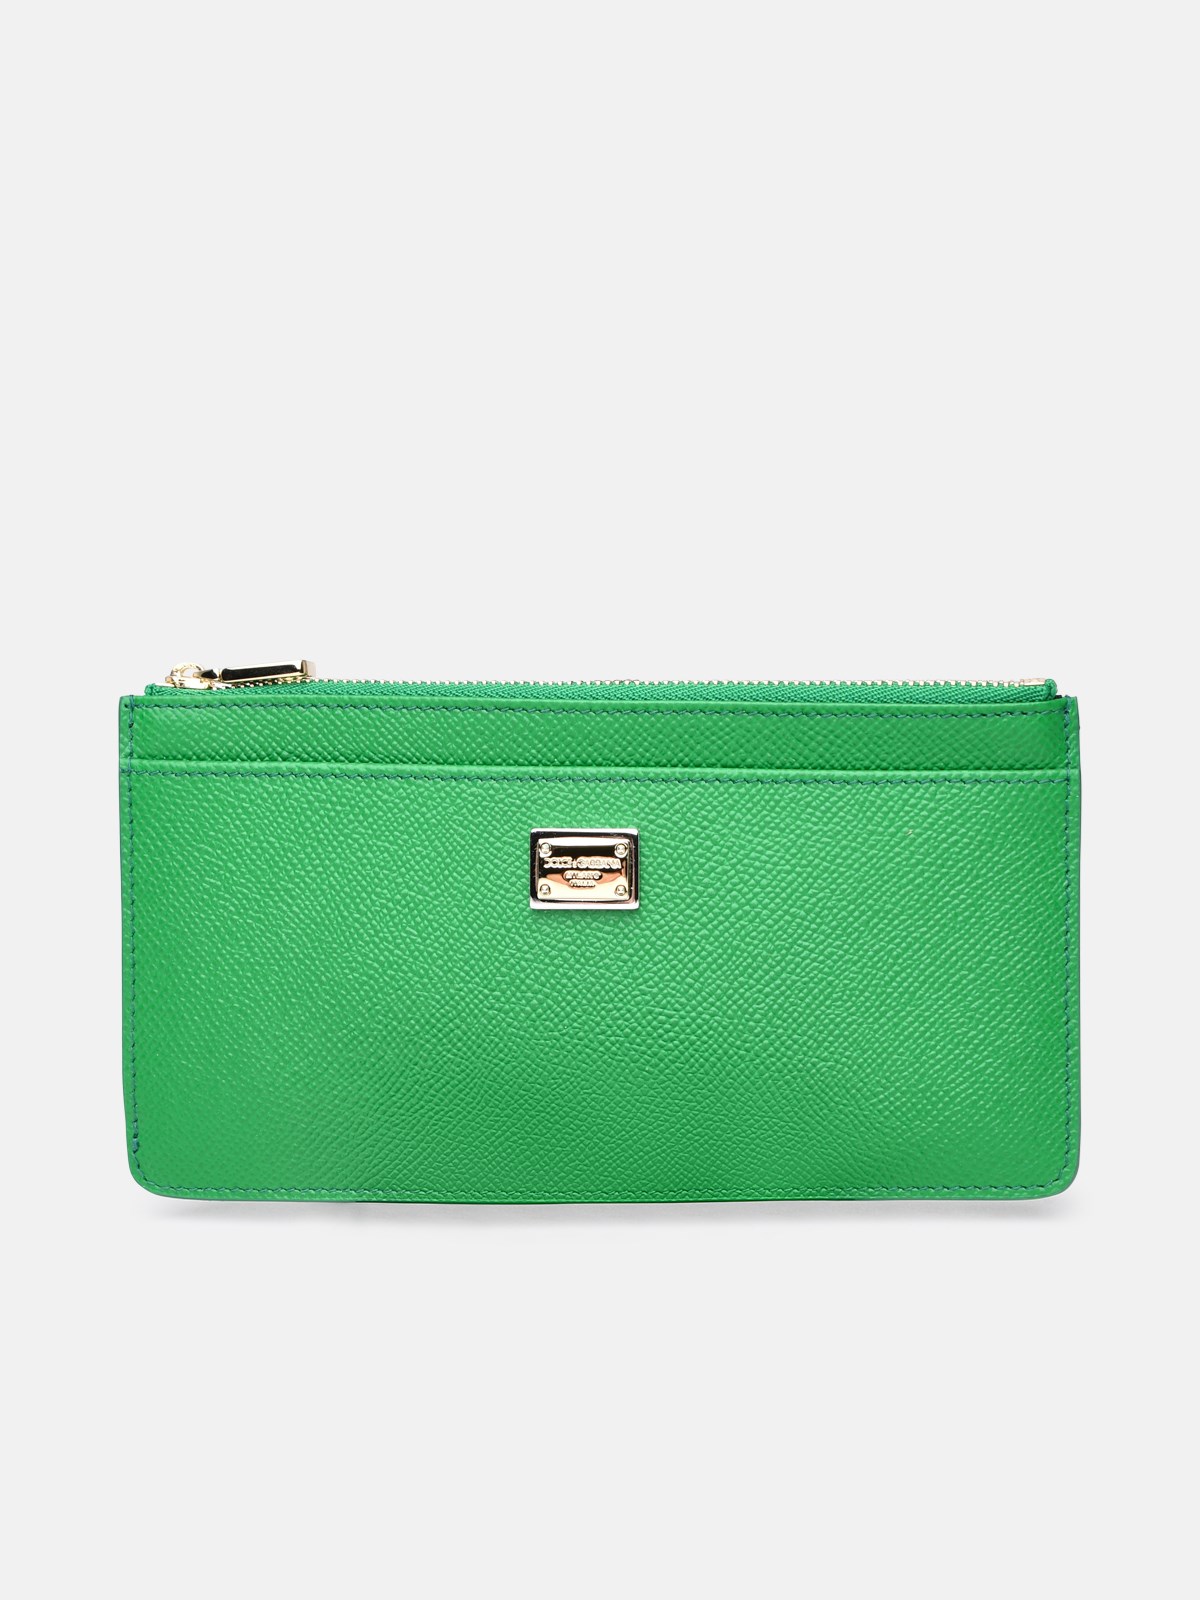 Dolce & Gabbana Green Leather Large Card Holder